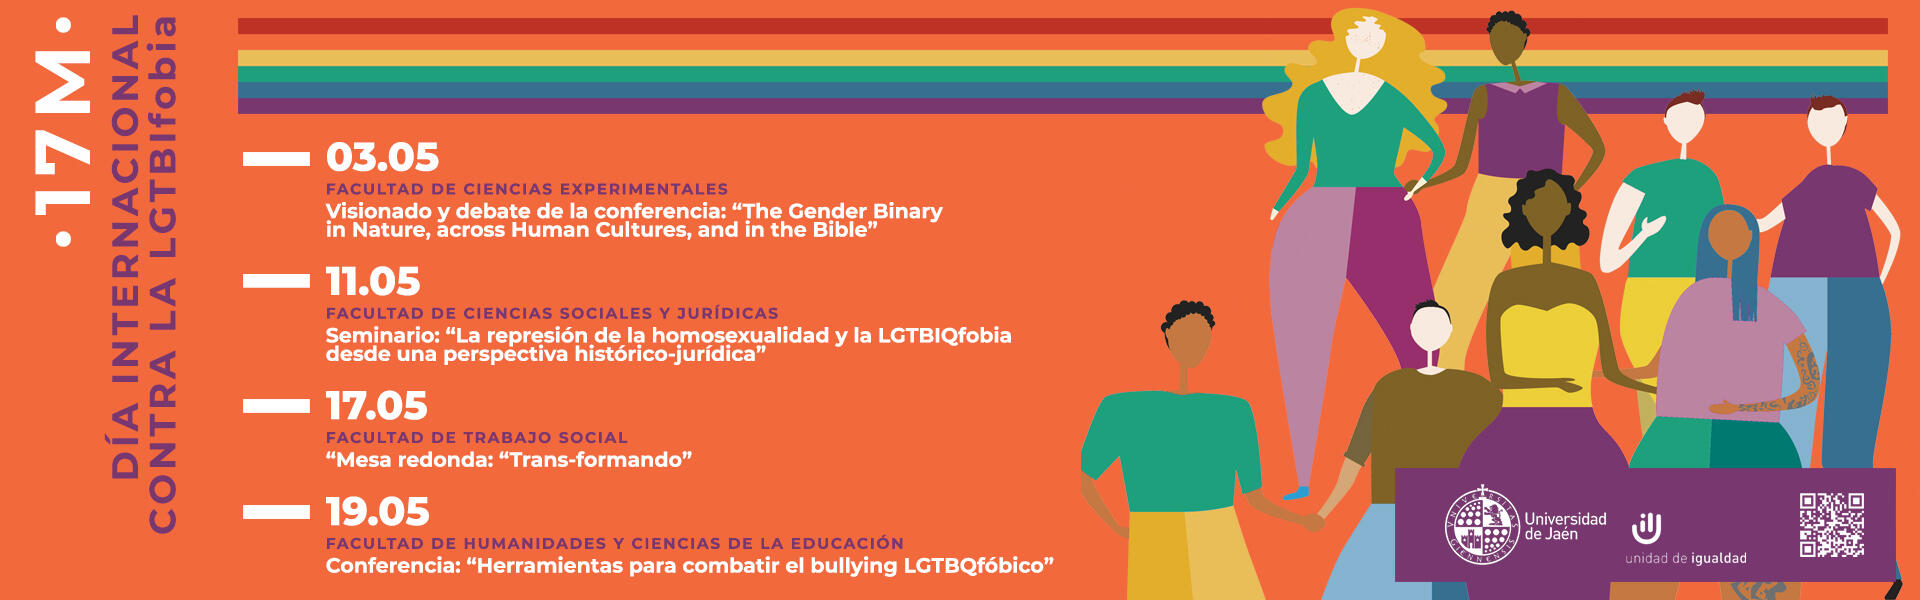 17M. Día Internacional contra la LGTBIfobia